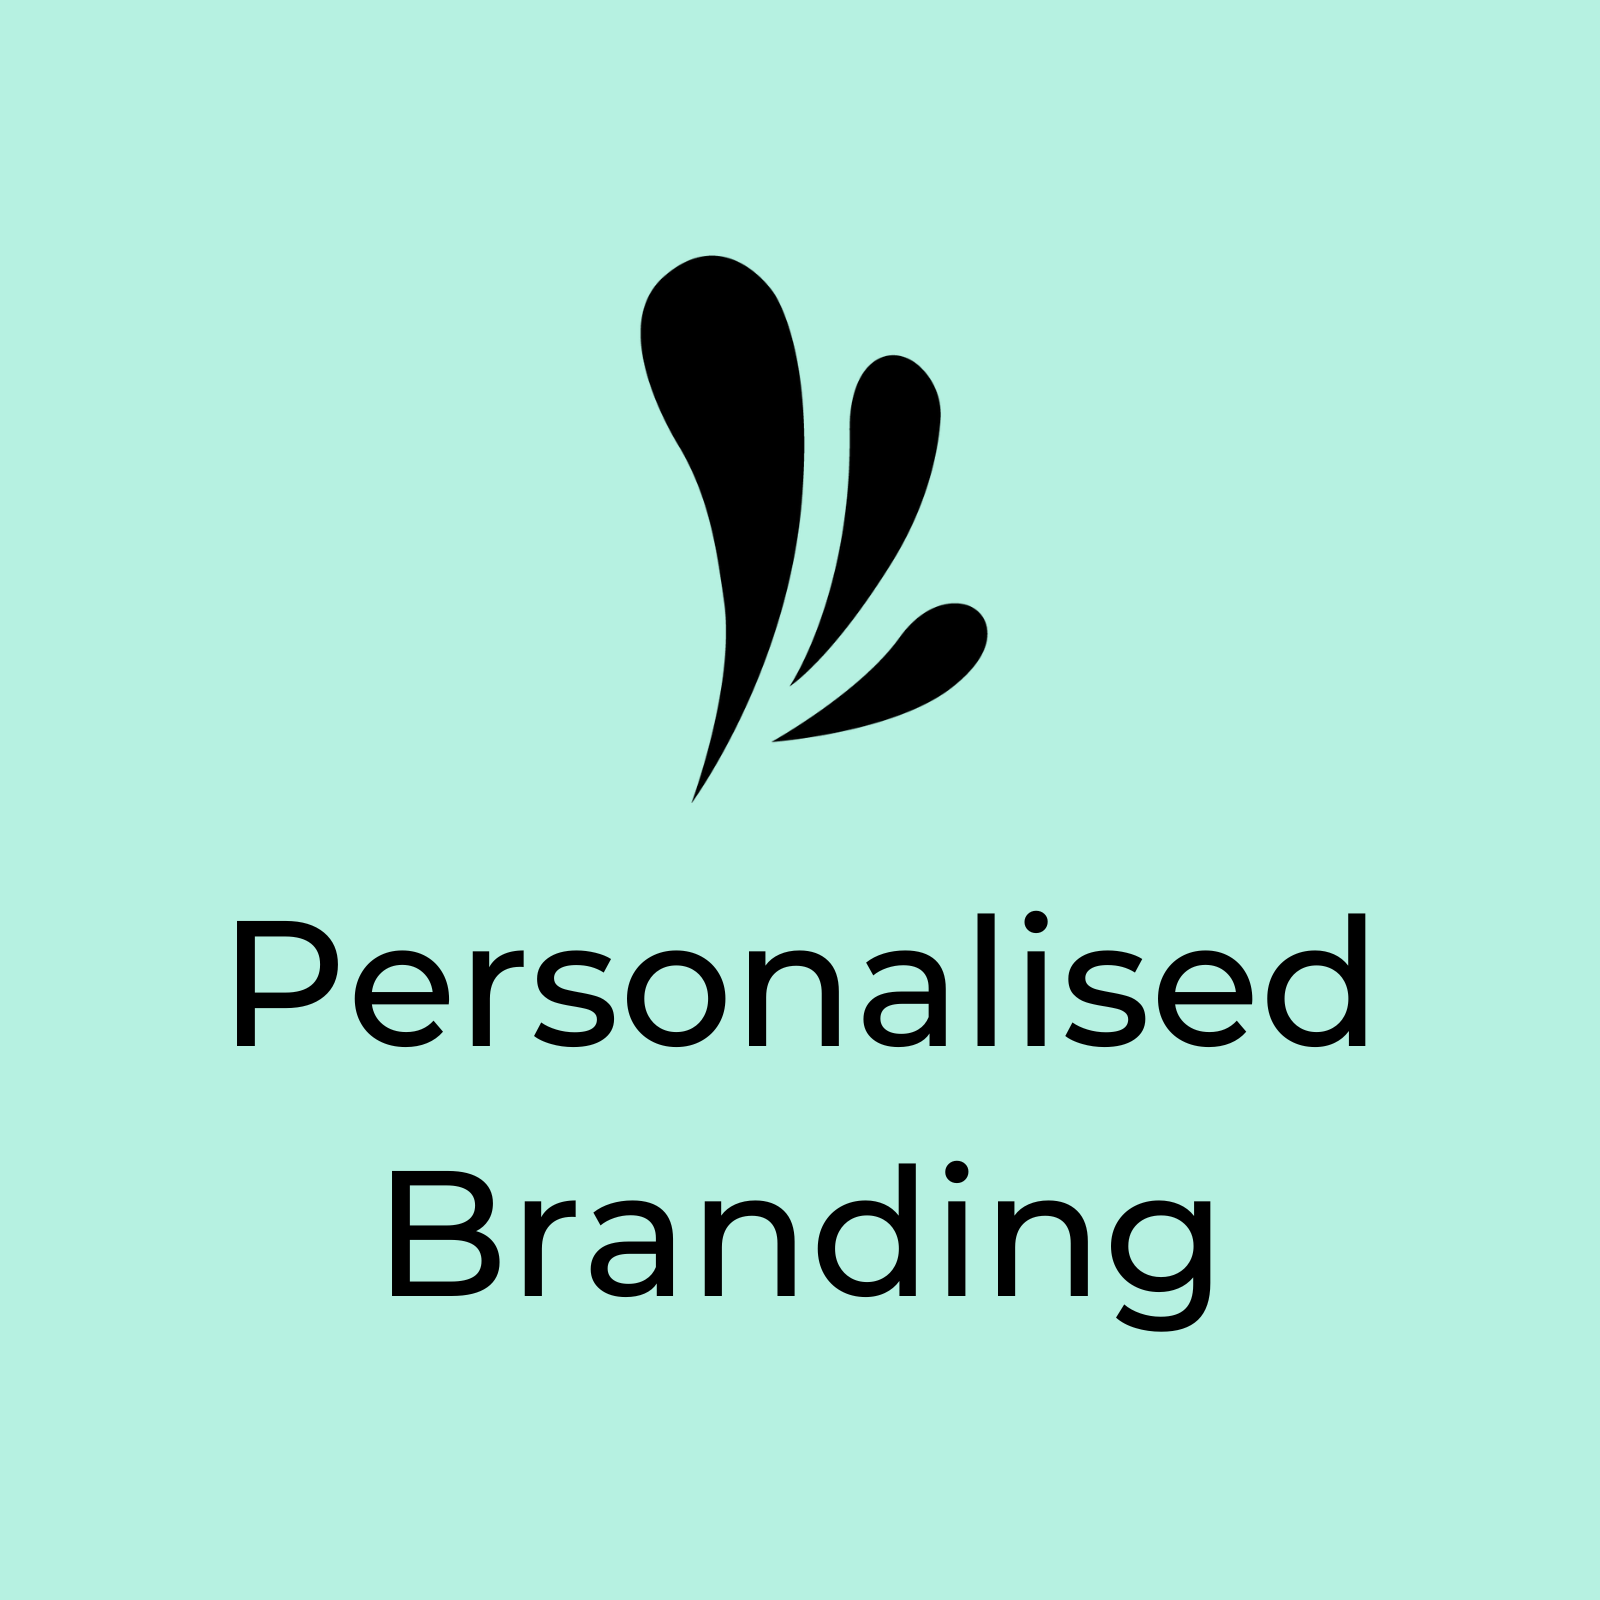 Personalized Branding